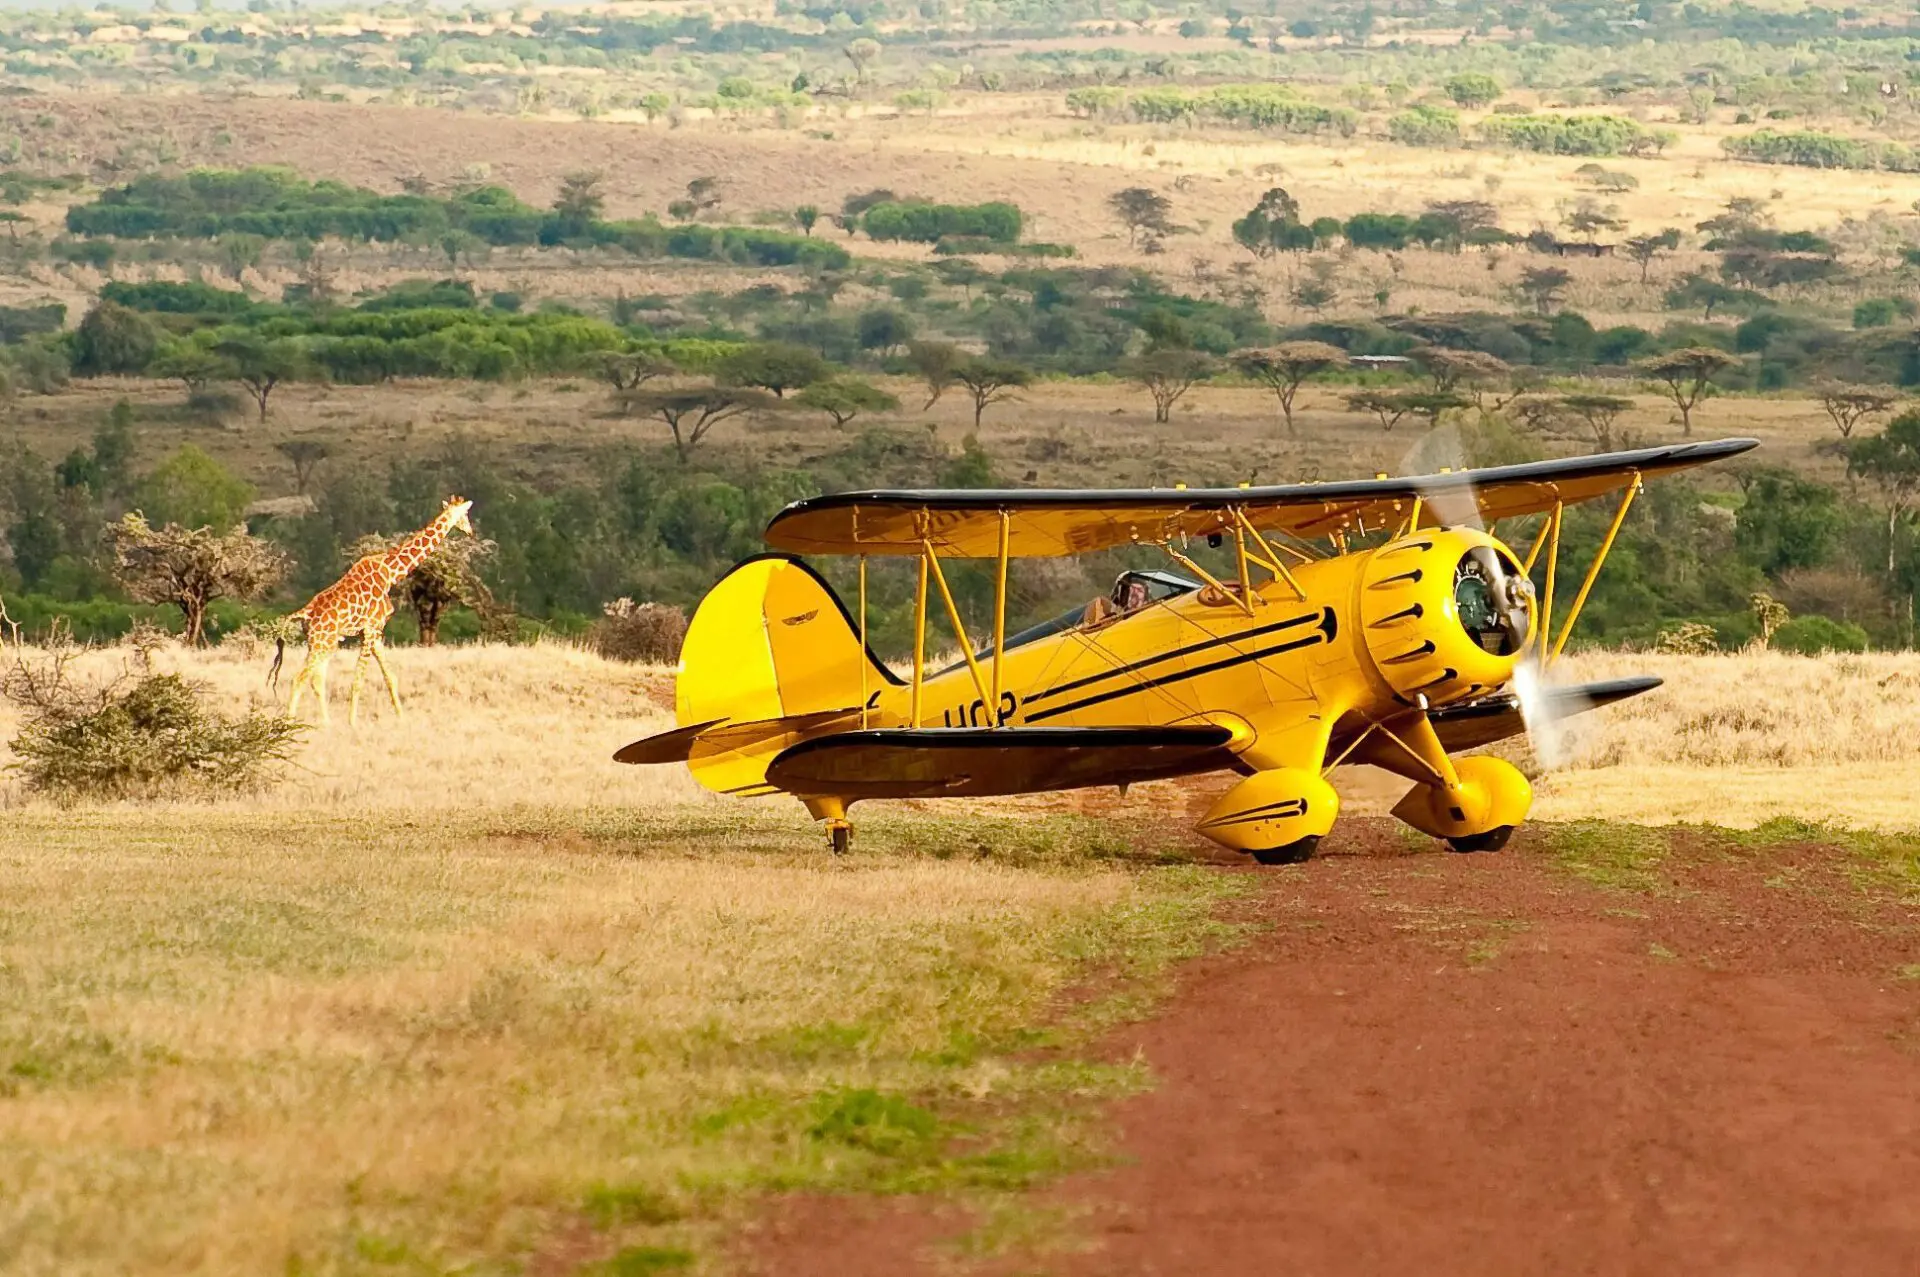 Kenya Luxury Safaris, Yellow Biplane on the Runway in Lewa, Kenya